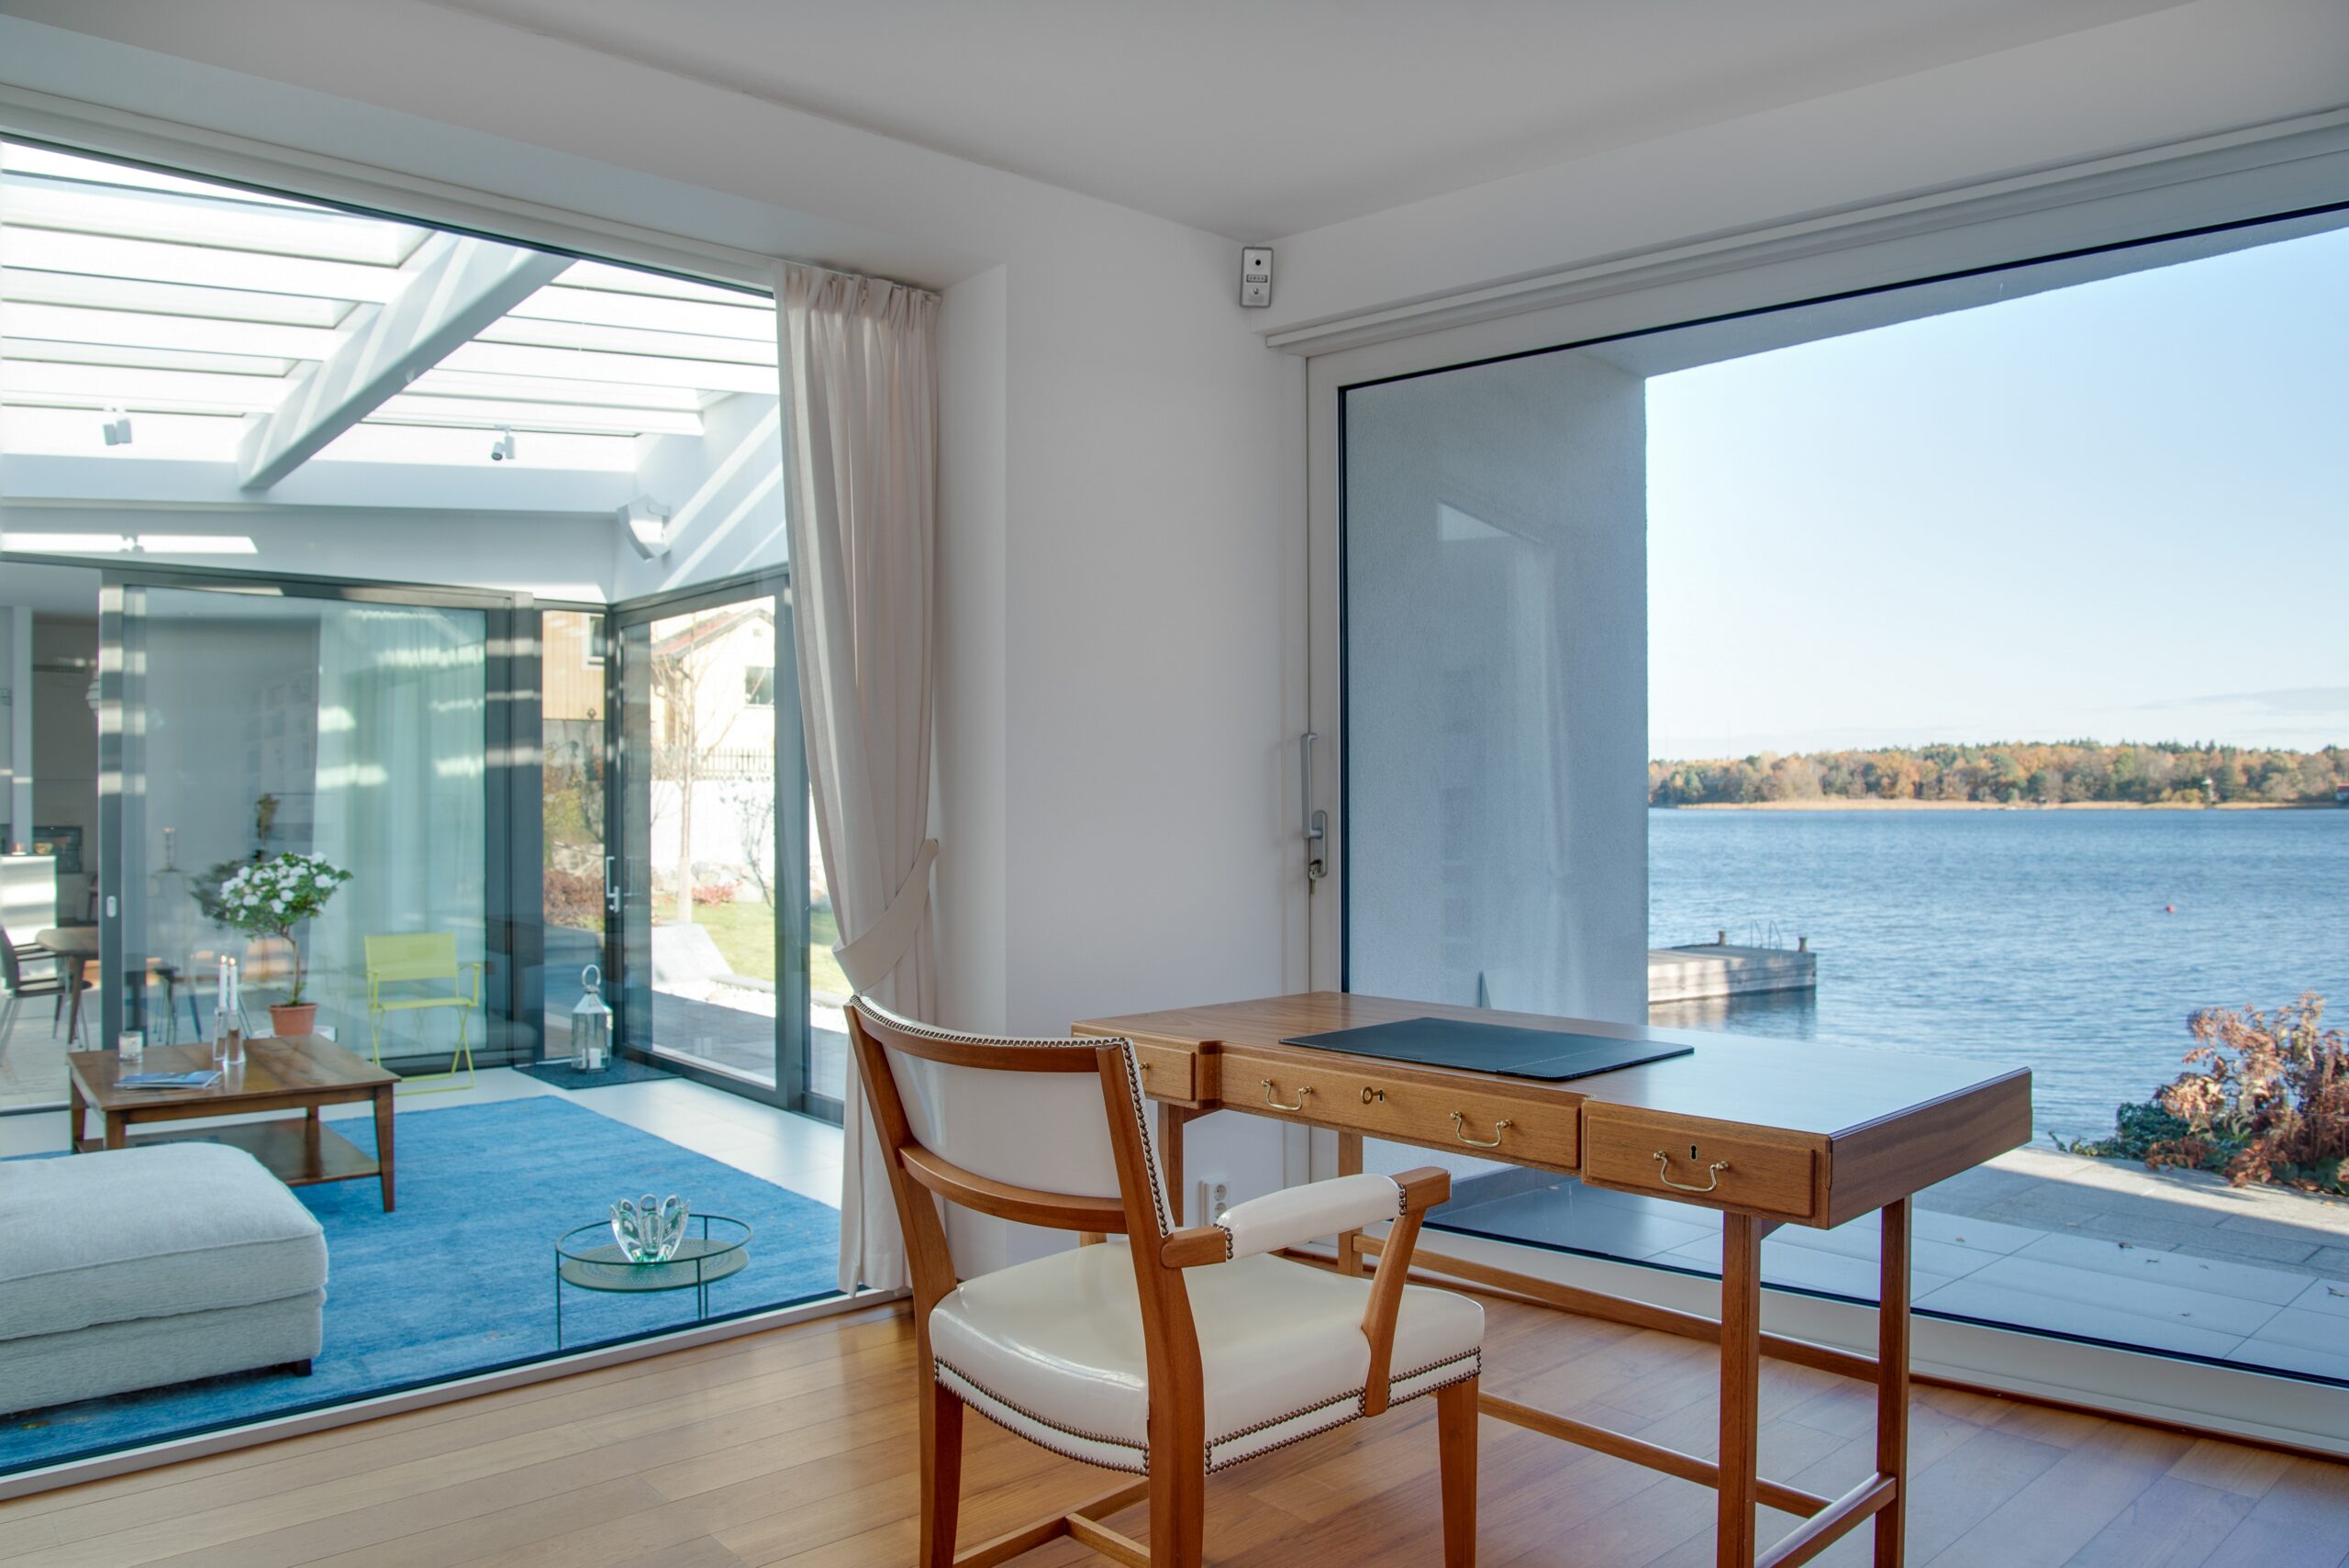 luxury-beach-house-with-glass-windows-beautiful-scenery-sea-scaled.jpg